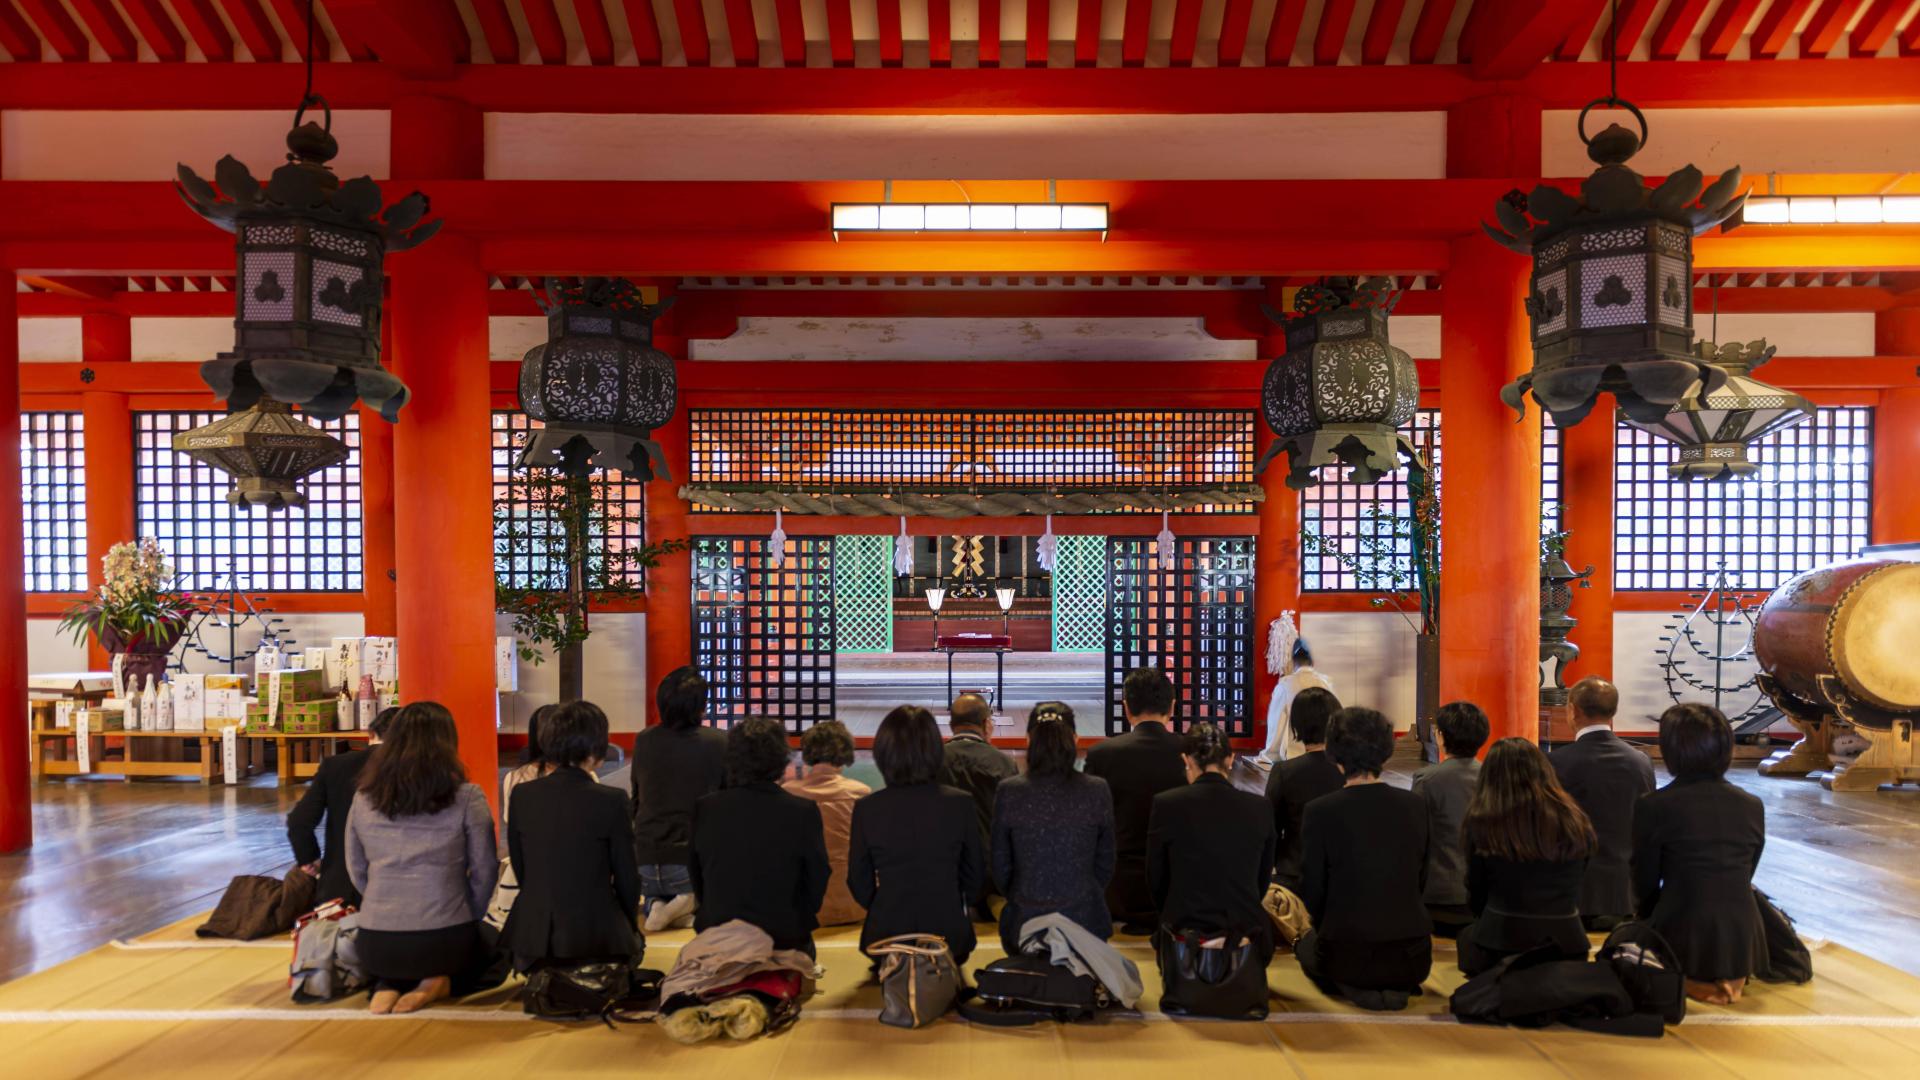 Itsukushima,Schrein, Japan, Asien, Religion, Gebet, Japaner, Temple.